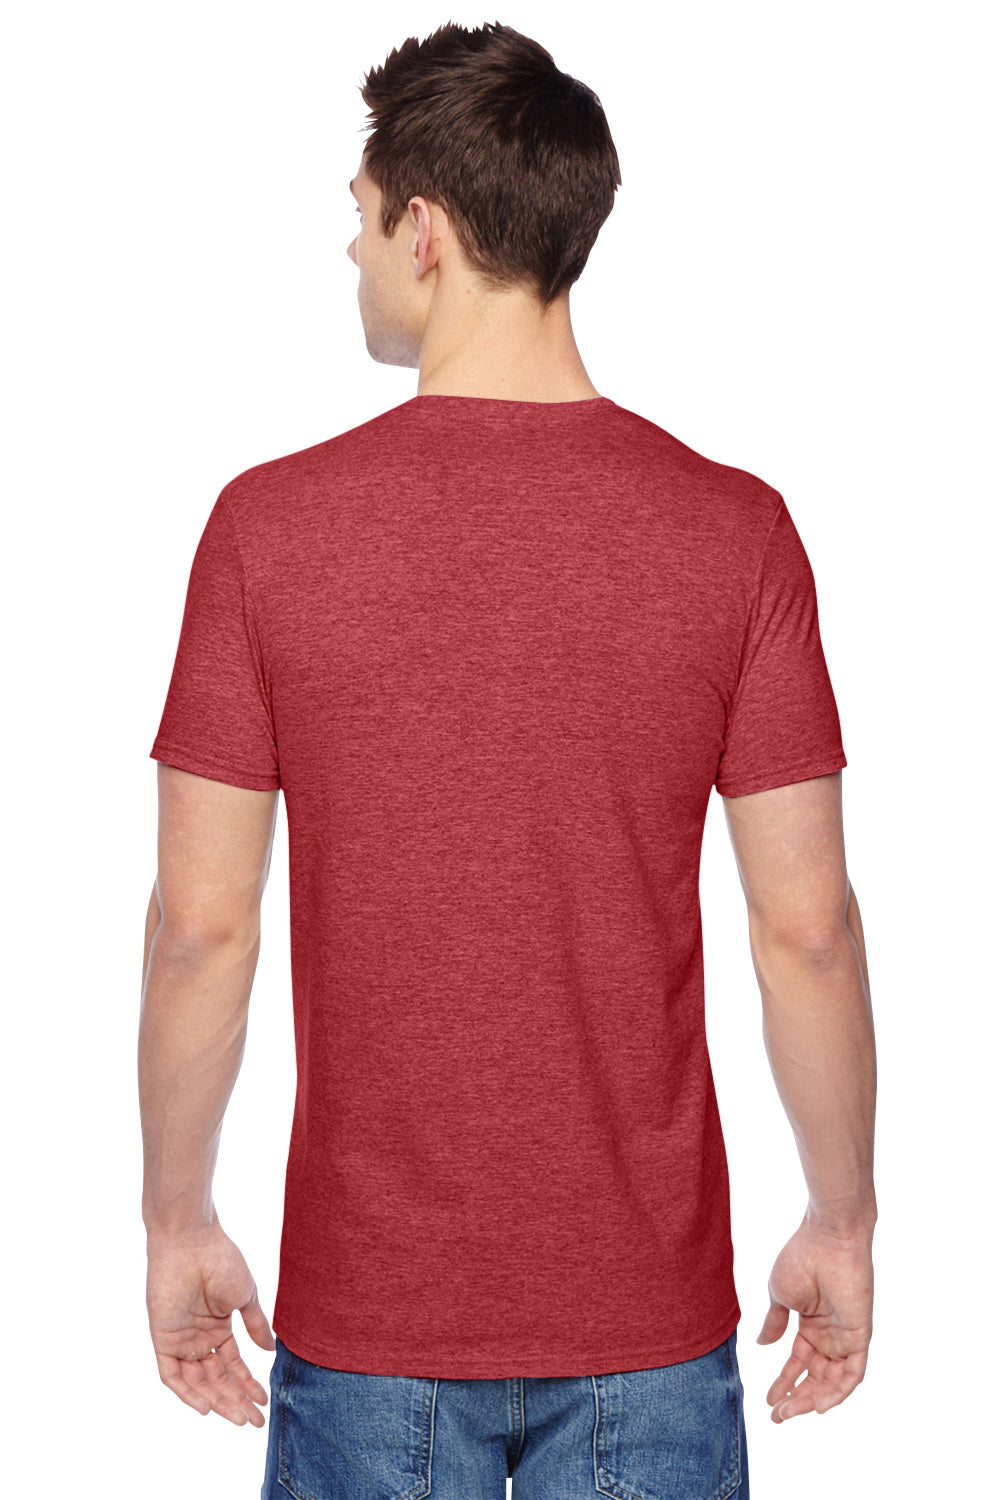 Fruit Of The Loom SF45R Mens Sofspun Jersey Short Sleeve Crewneck T-Shirt Heather Brick Red Back